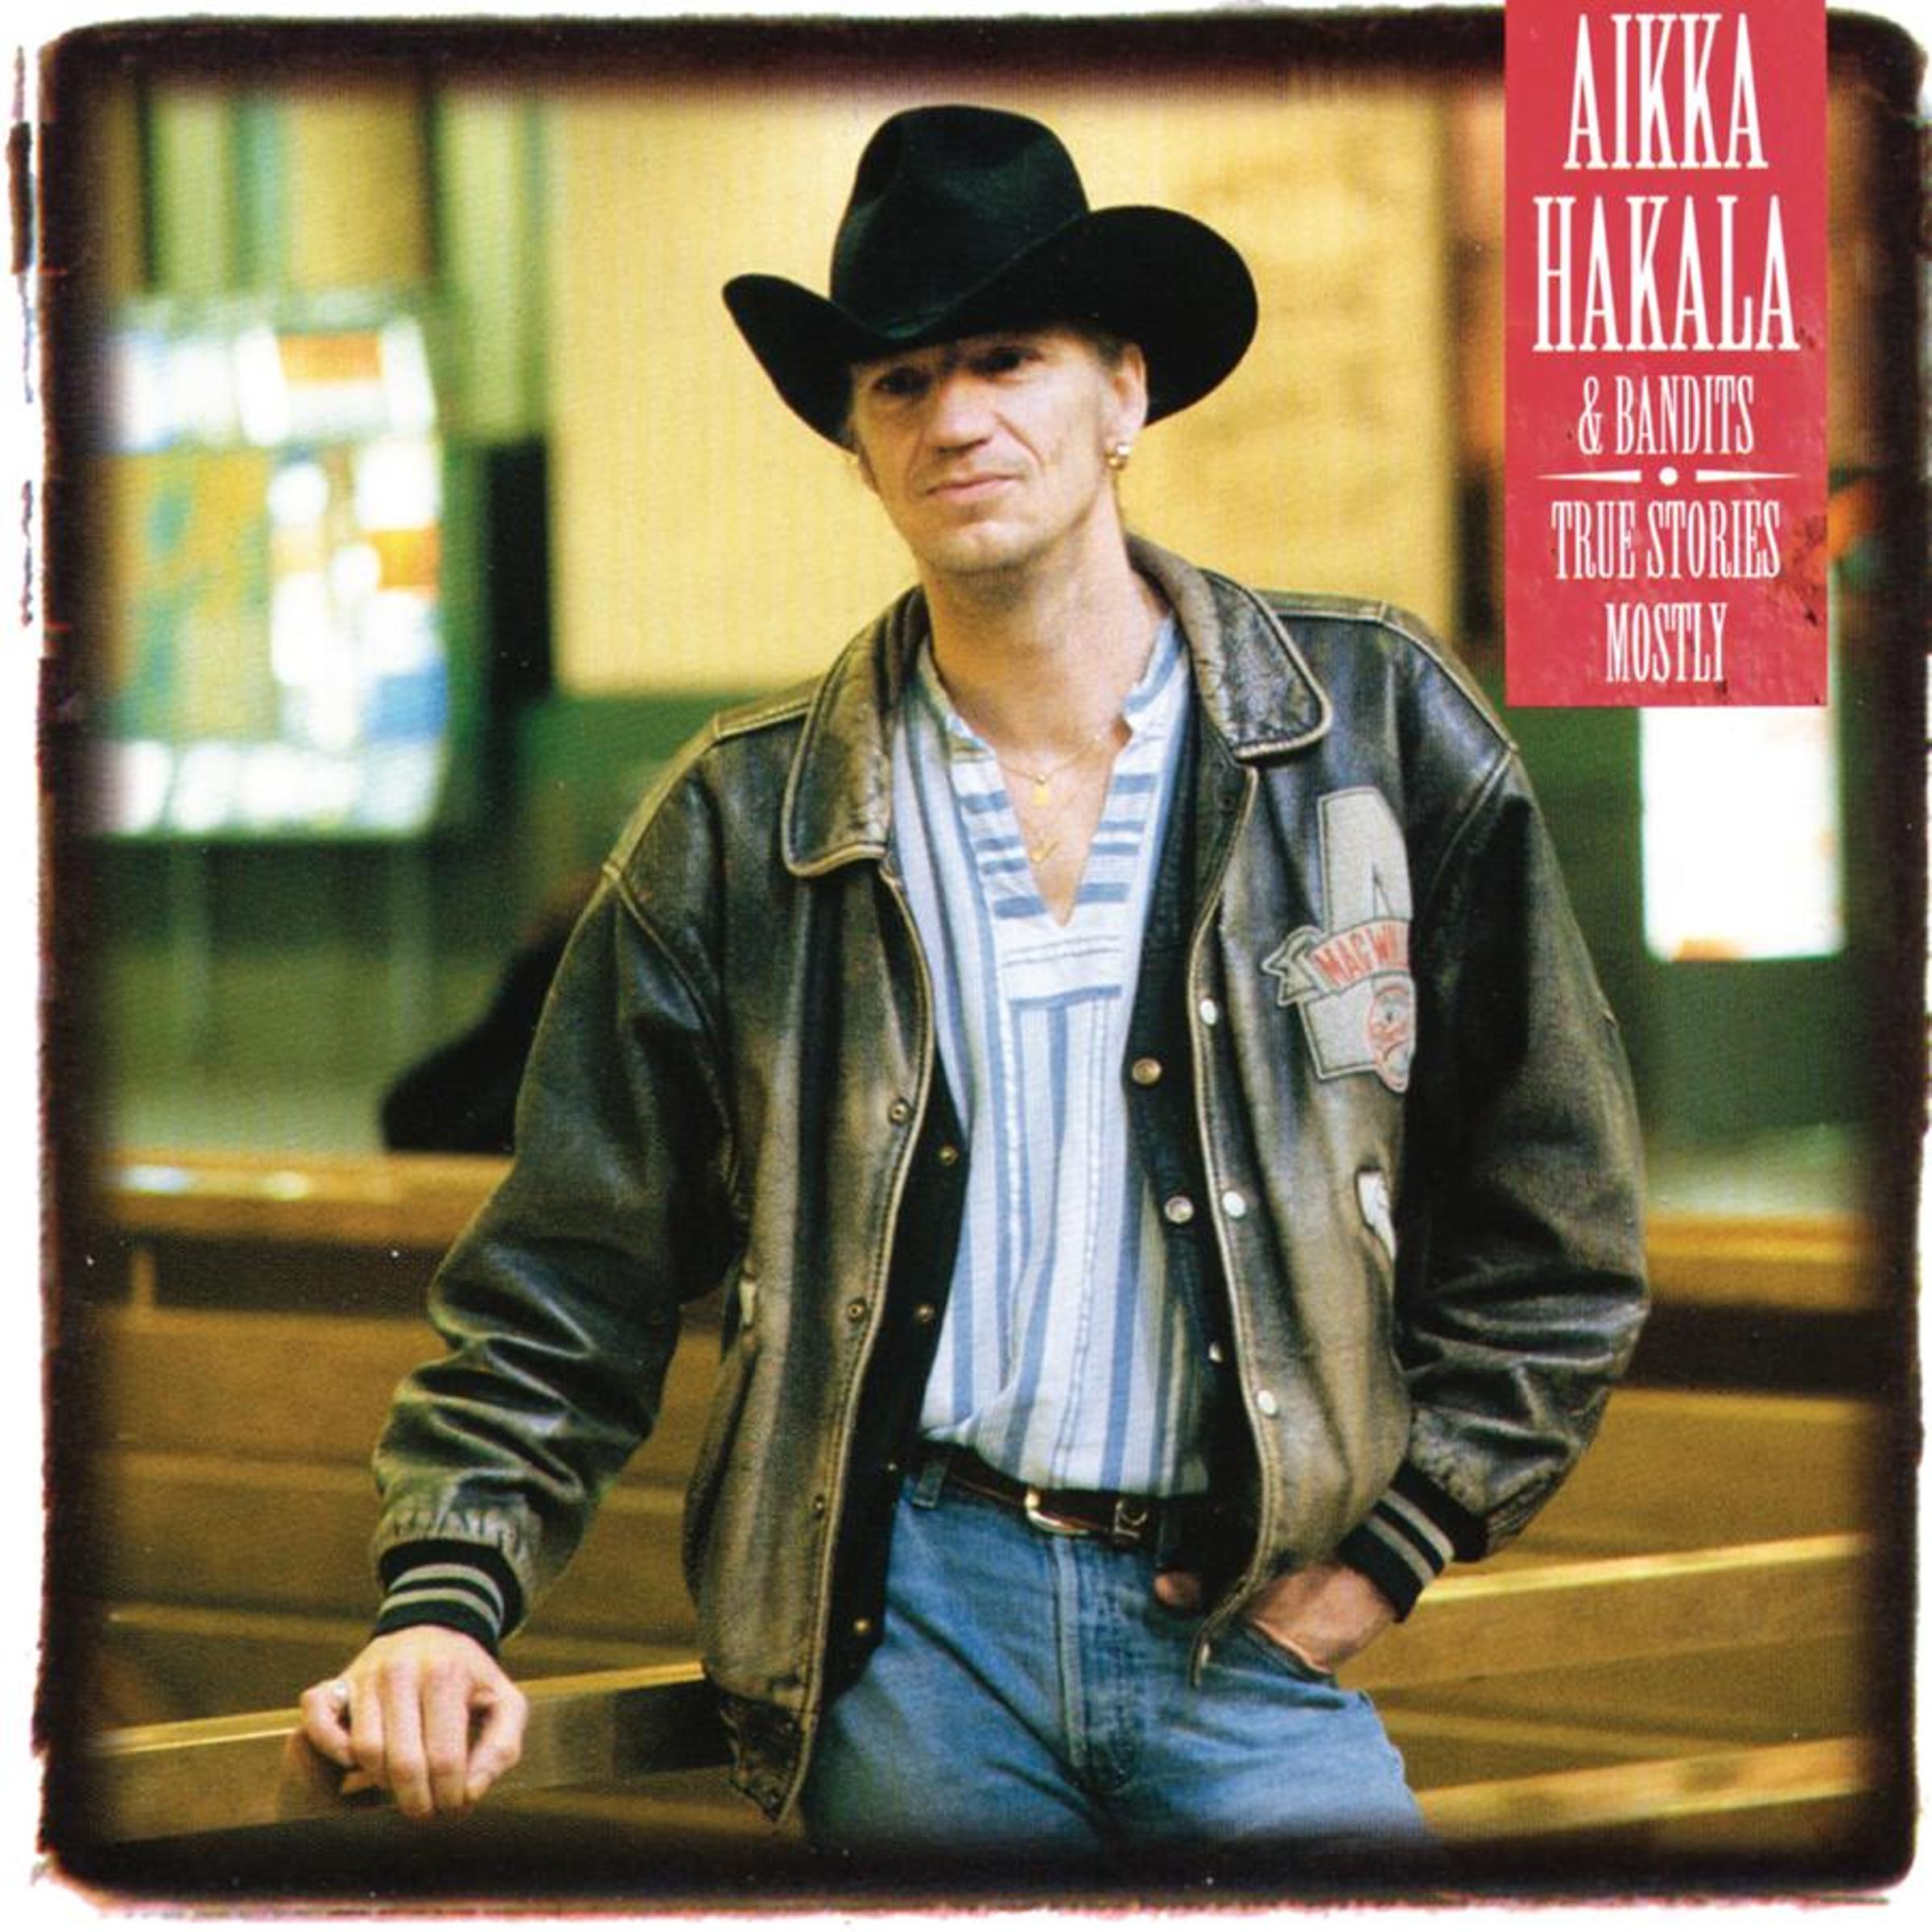 Aikka Hakala - True Stories Mostly - 2xCD